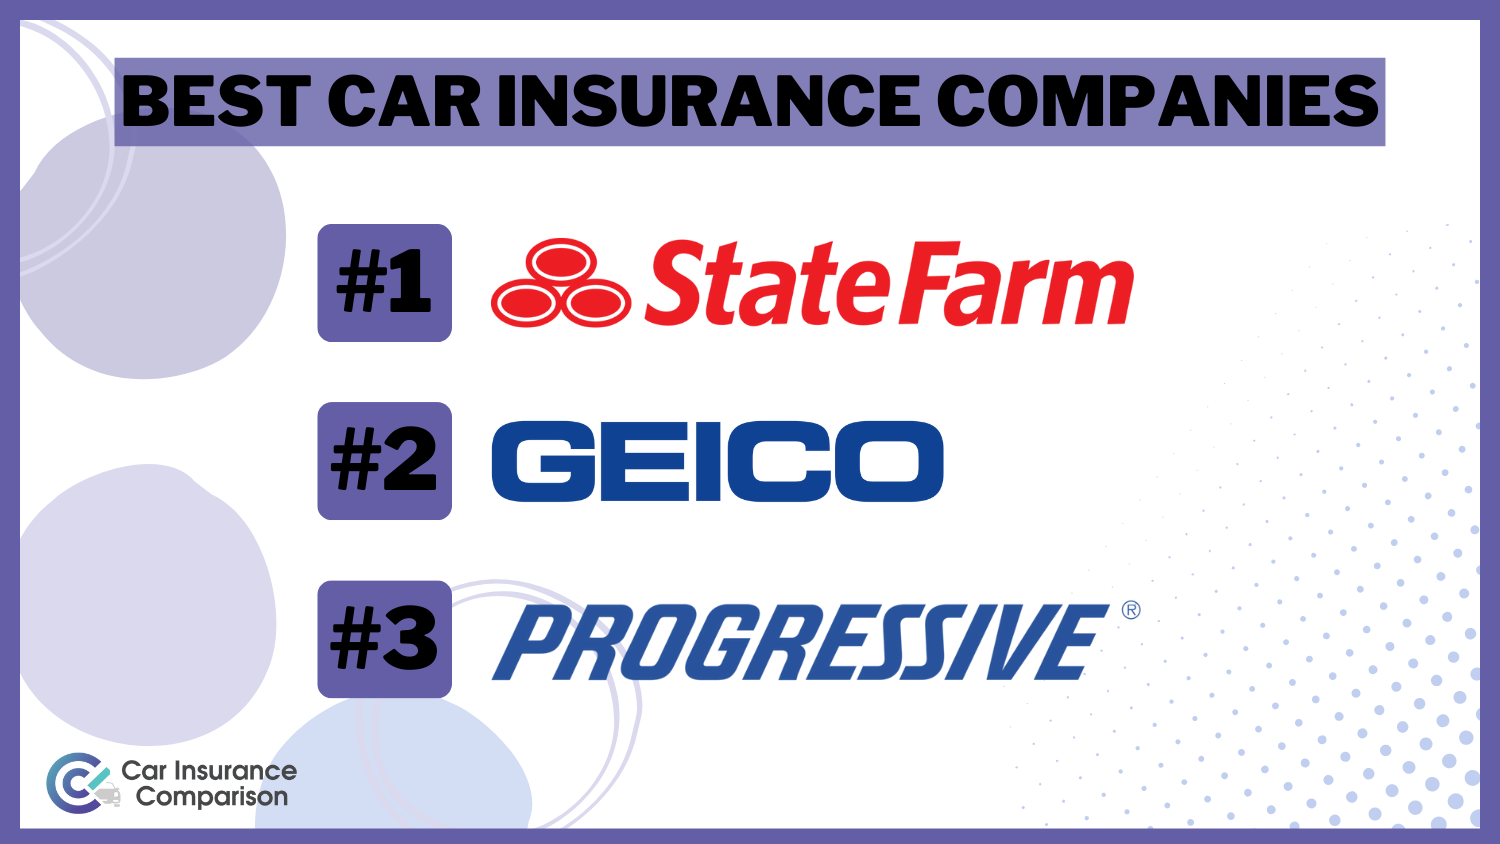 Best Car Insurance Companies: State Farm, Geico, and Progressive